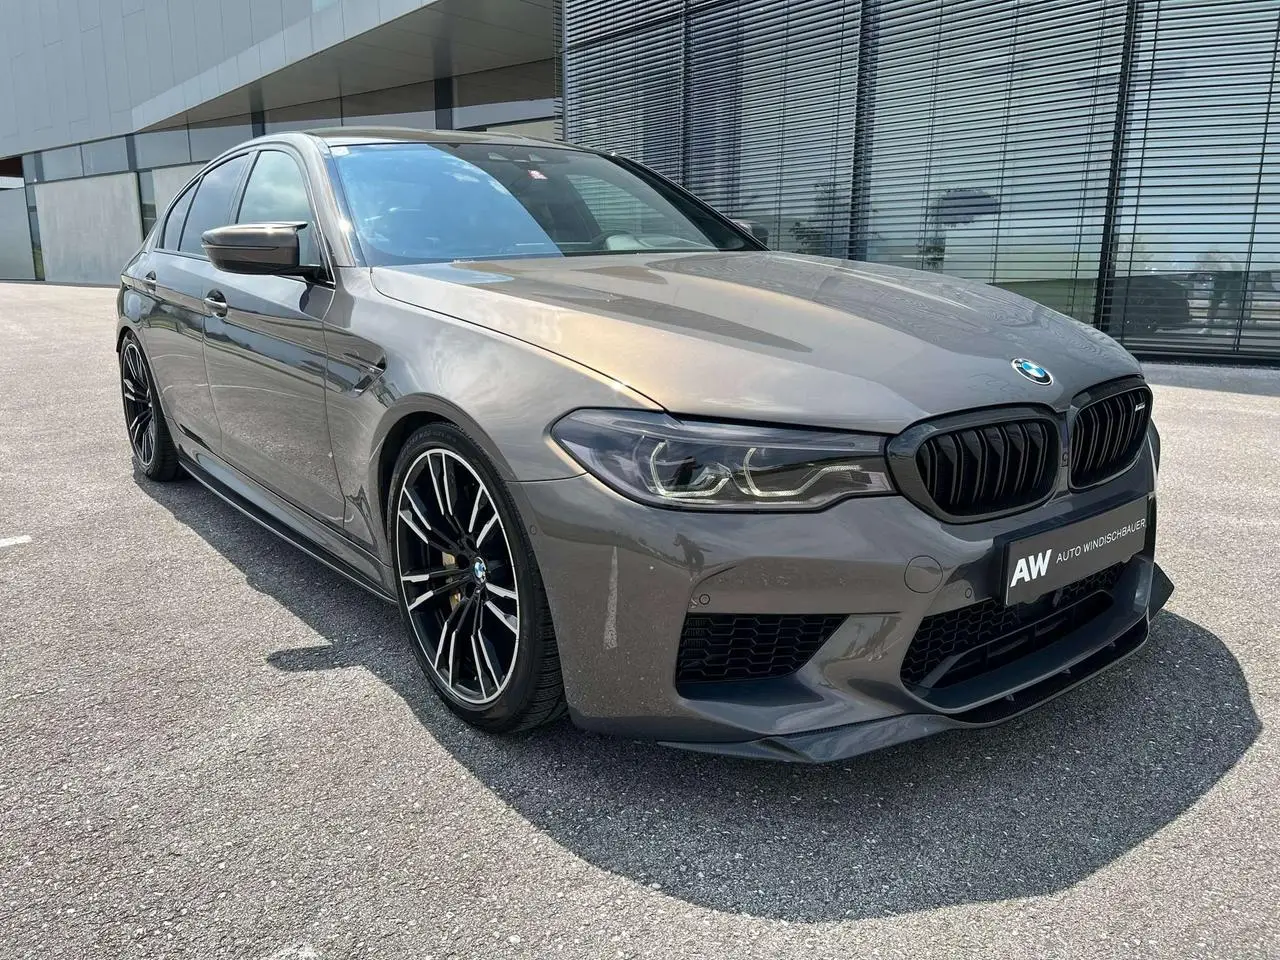 Used BMW M5 ad : Year 2018, 85890 km